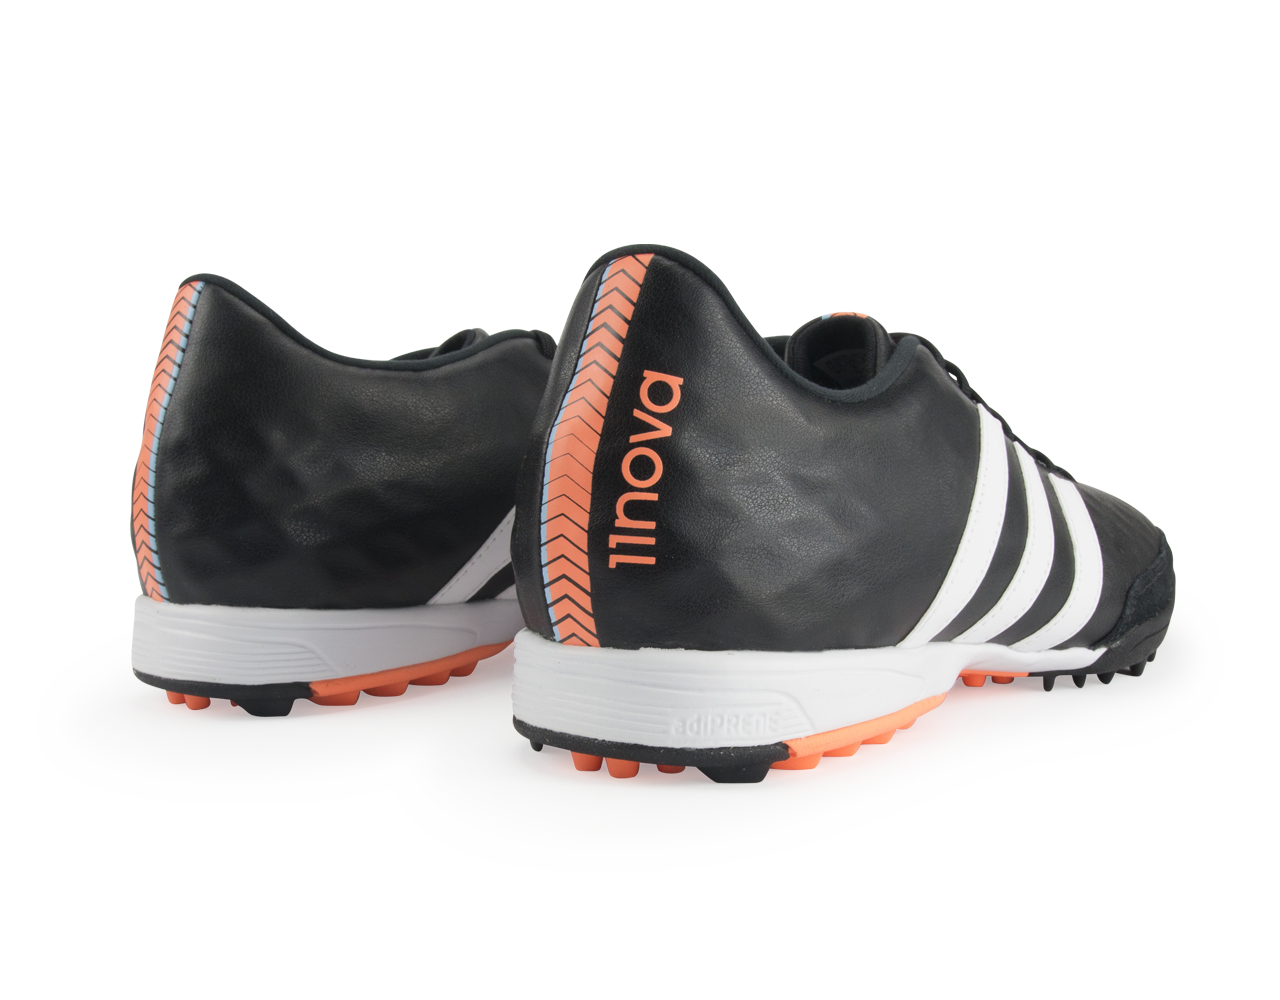 humedad Requisitos Oscuro adidas Men's 11Nova Turf Soccer Shoes Core Black/White/Flash Orange –  Azteca Soccer